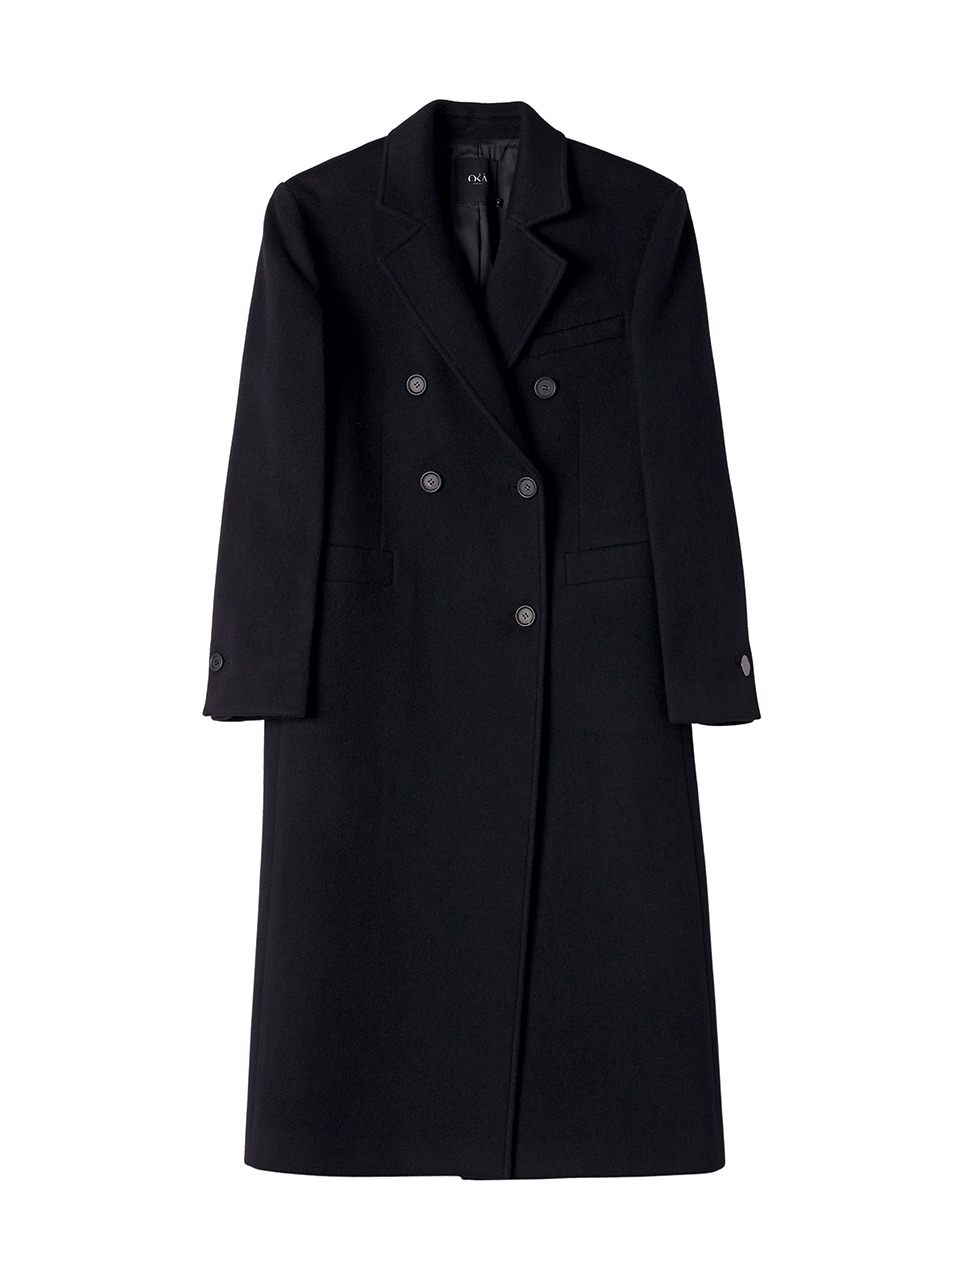 Mare Cashmere Tailored Coat Black